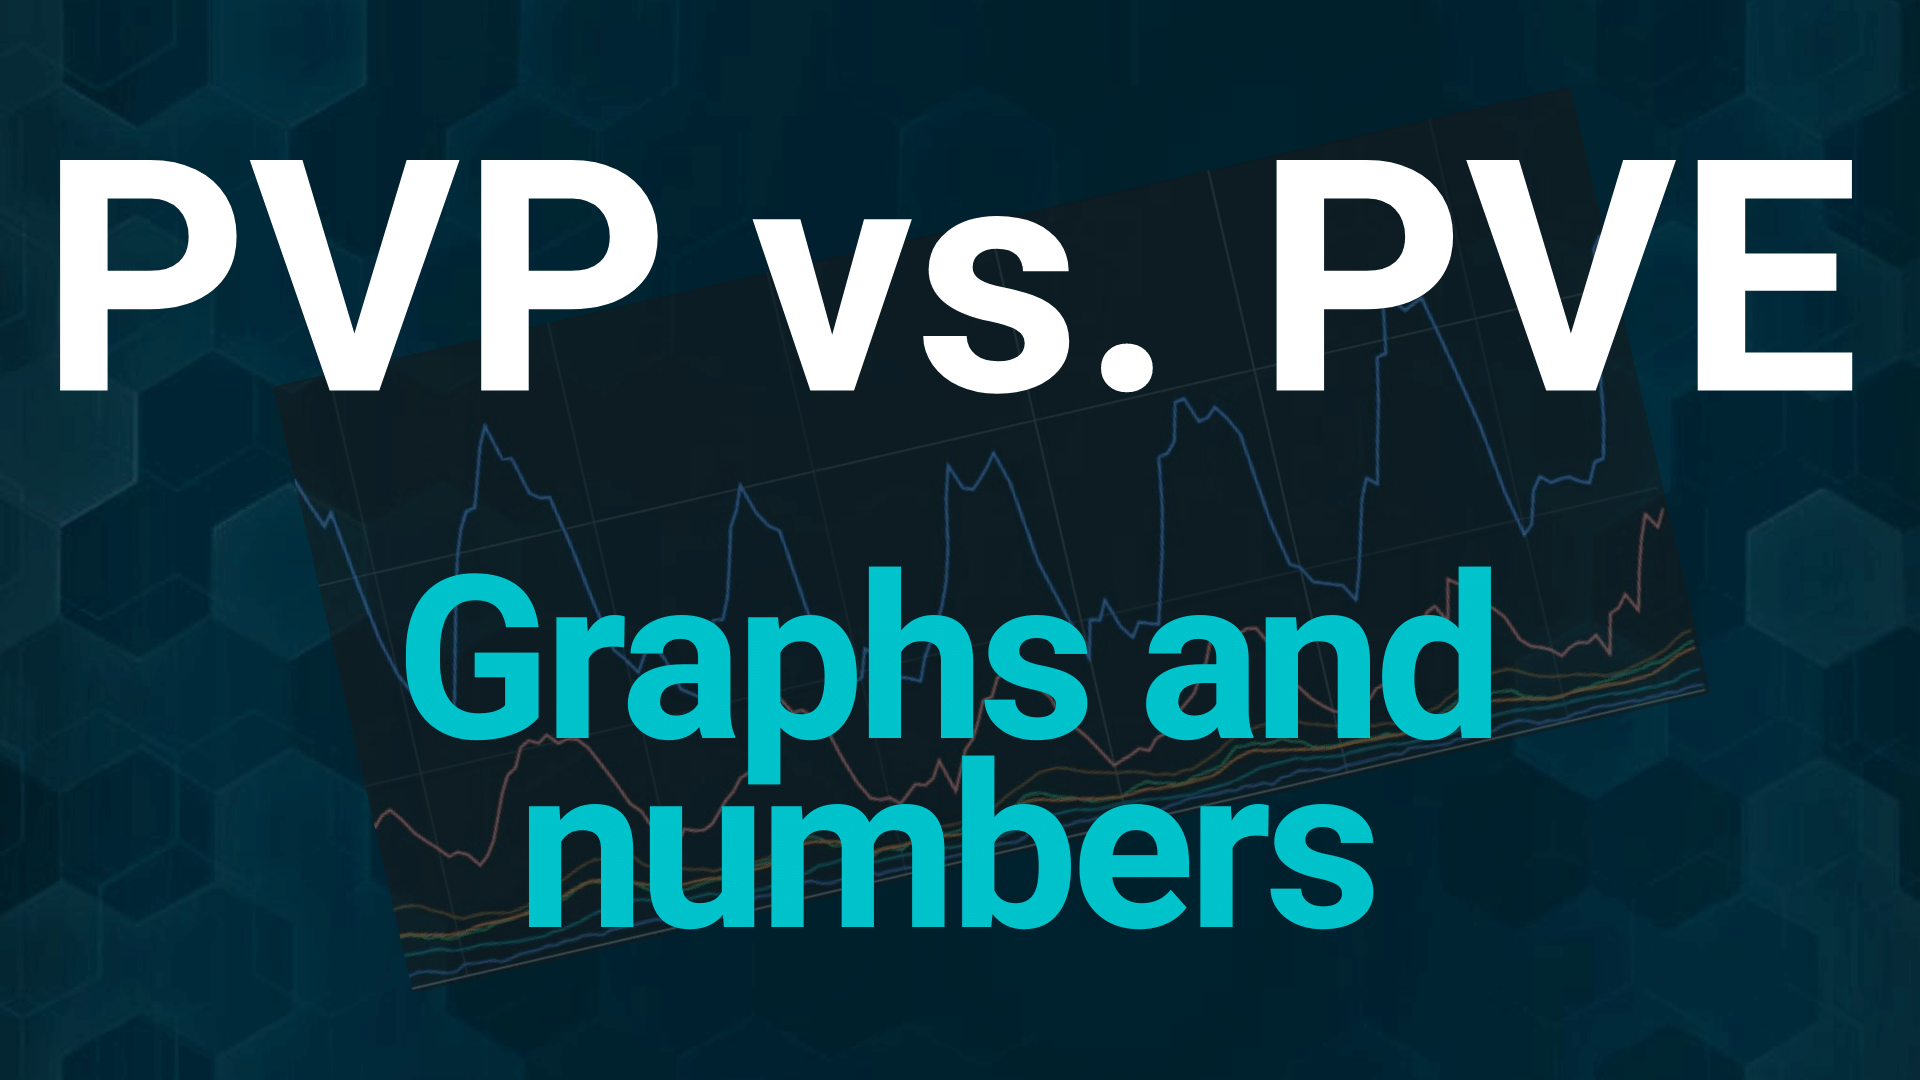 PVP vs. PVE